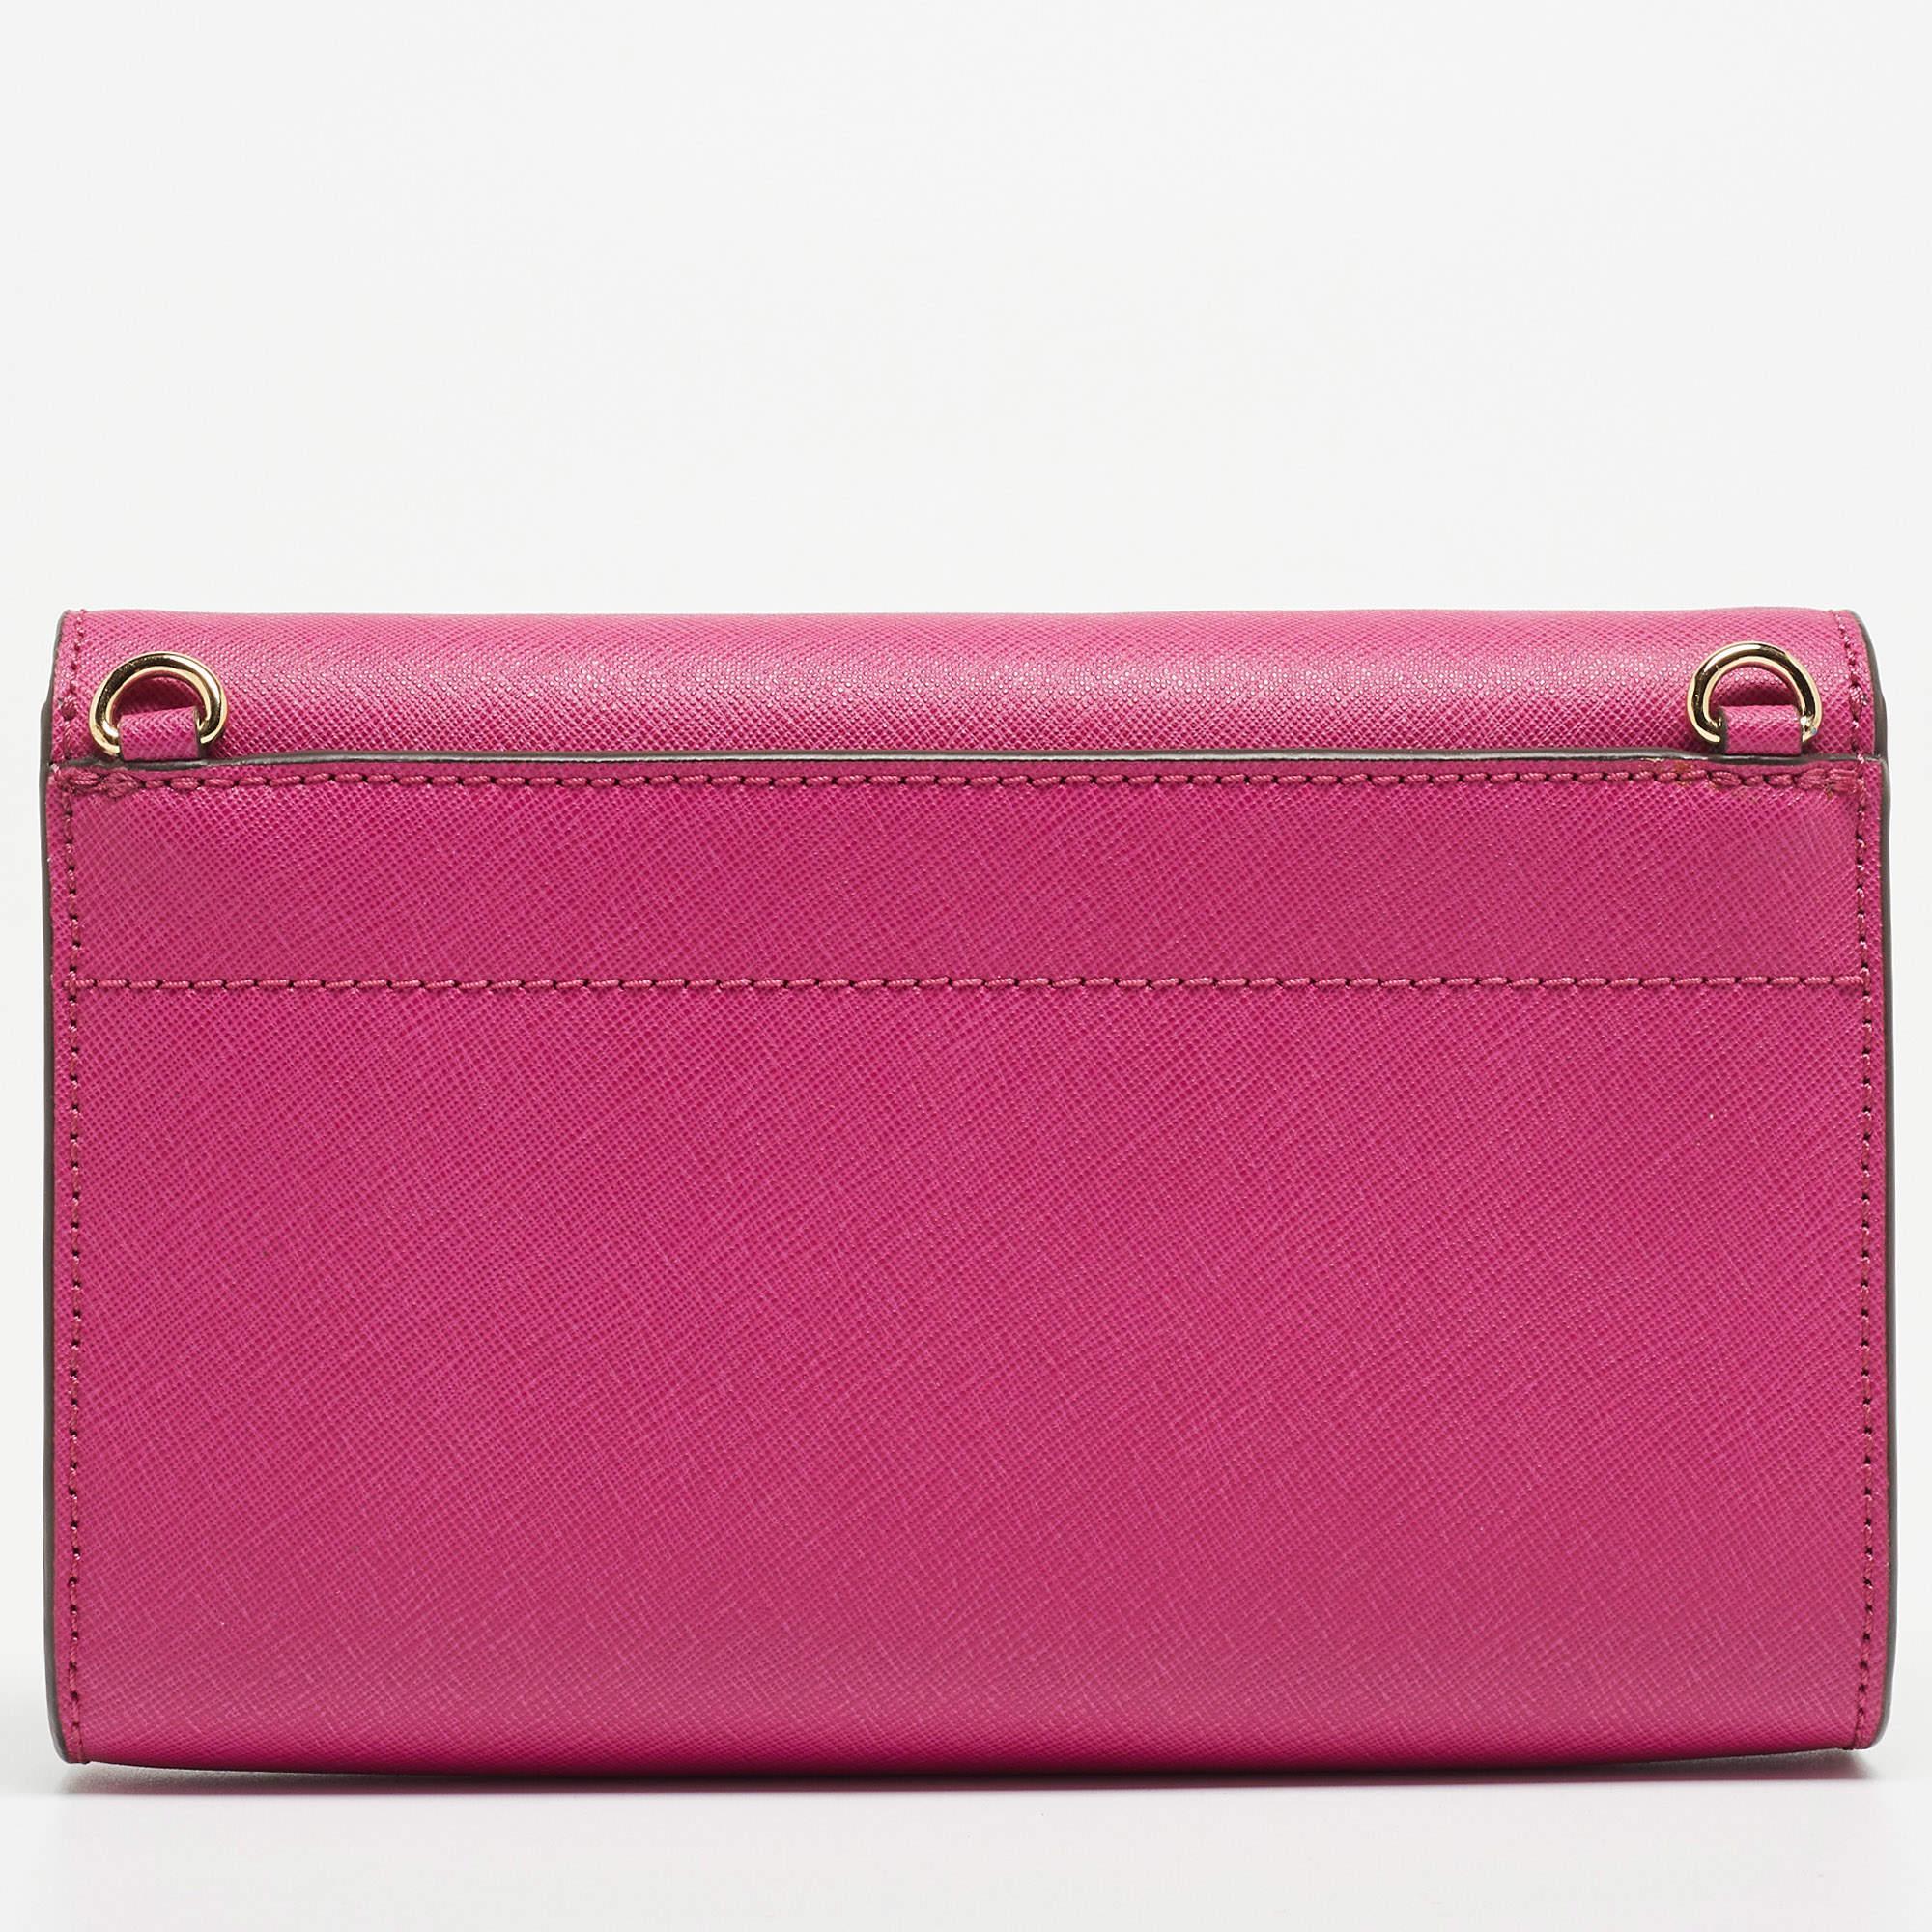 Women's Michael Kors Pink Saffiano Leather Flap 3in1 Crossbody Bag